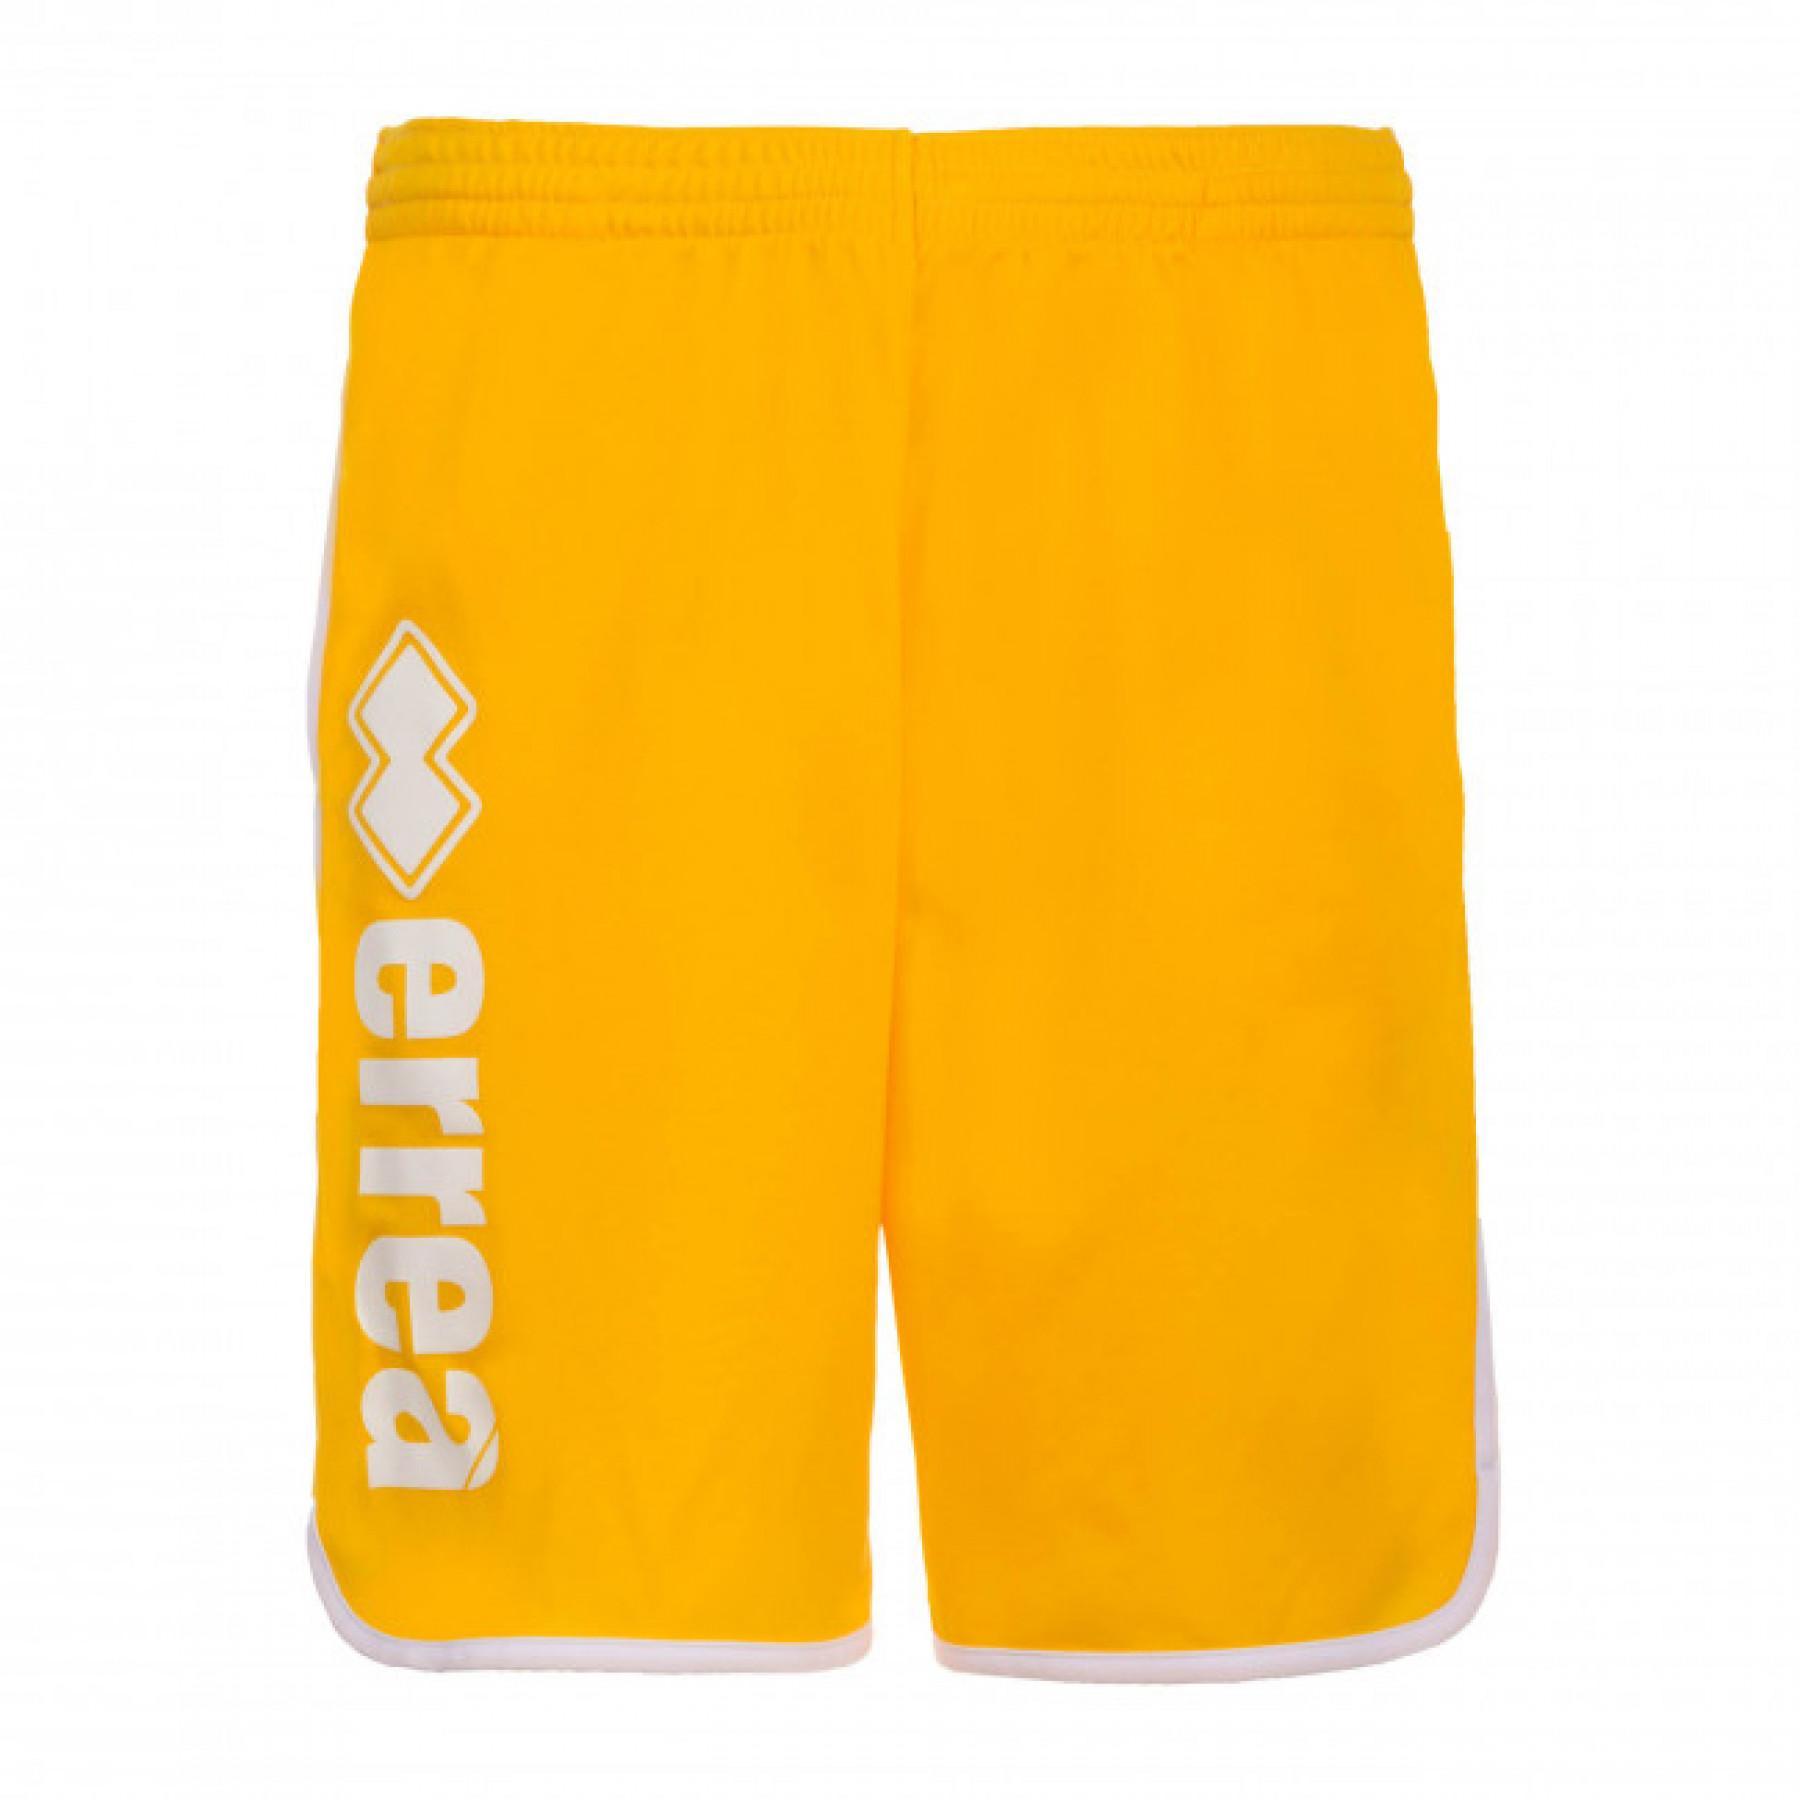 Bermuda shorts Errea essential